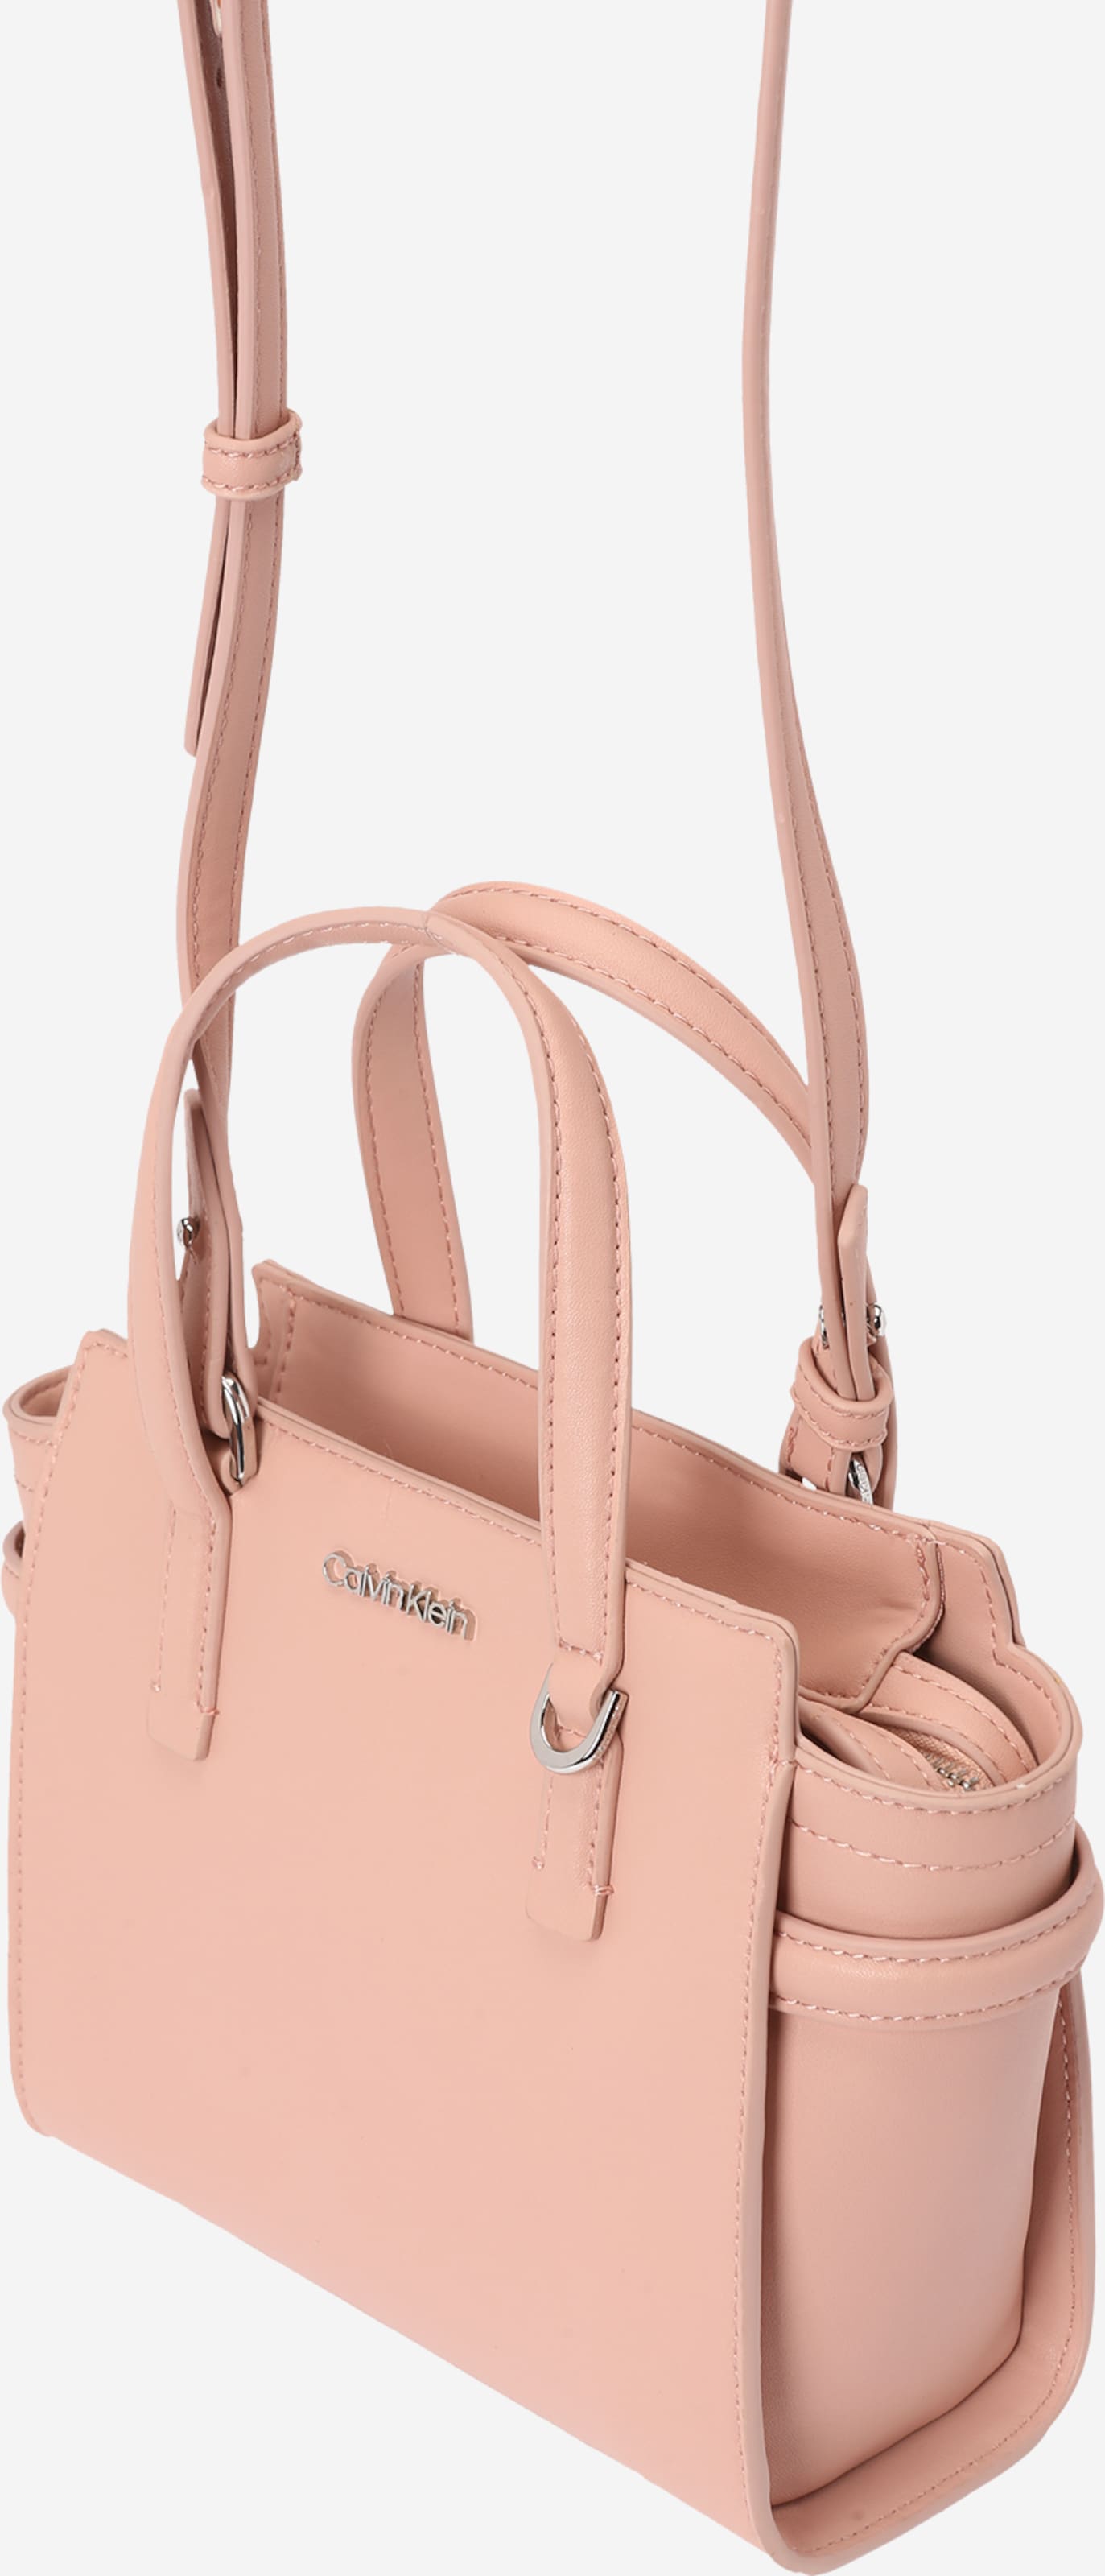 Introducir 84+ imagen calvin klein handbags pink